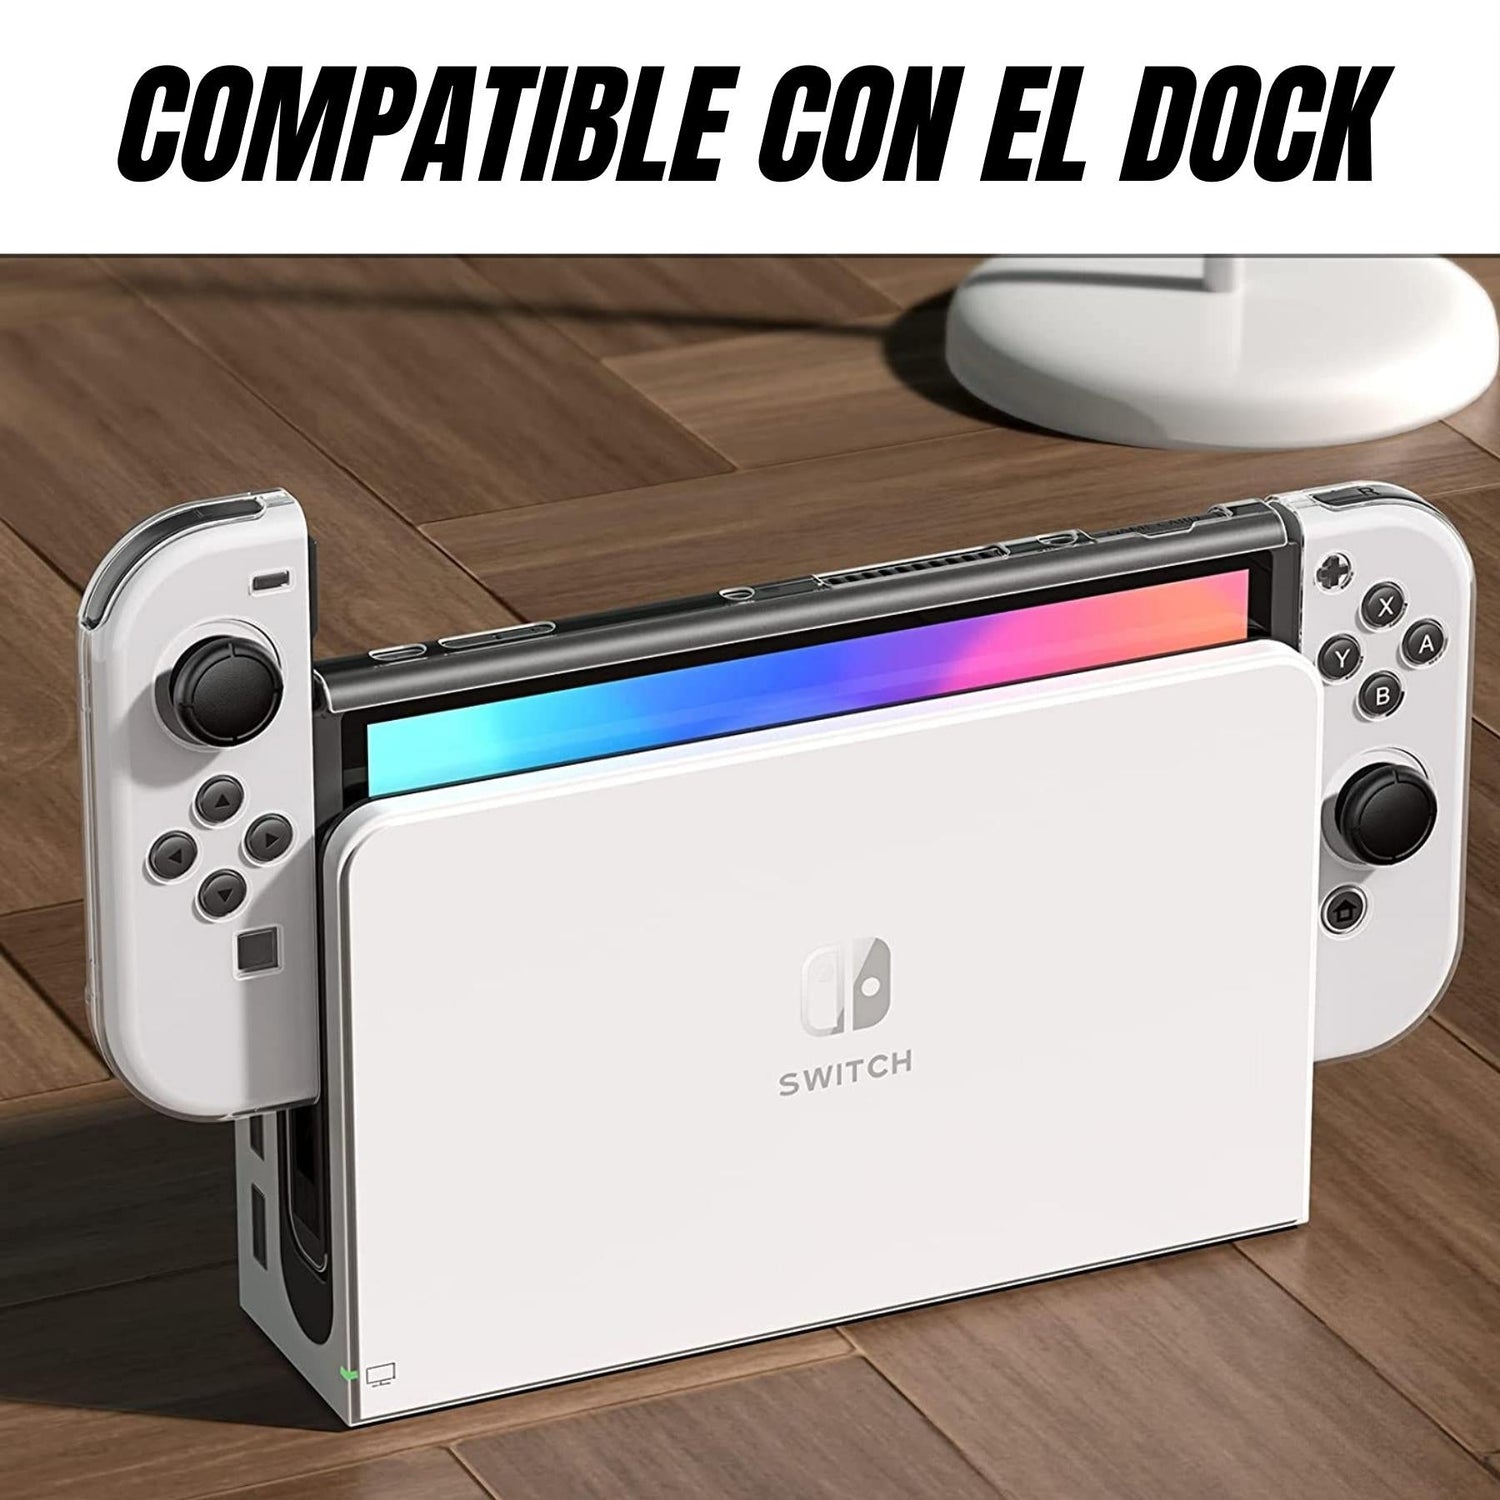 Copia de Kit de Accesorios Estuche Overol Nintendo Switch OLED 2022 - TiendaGeek.com